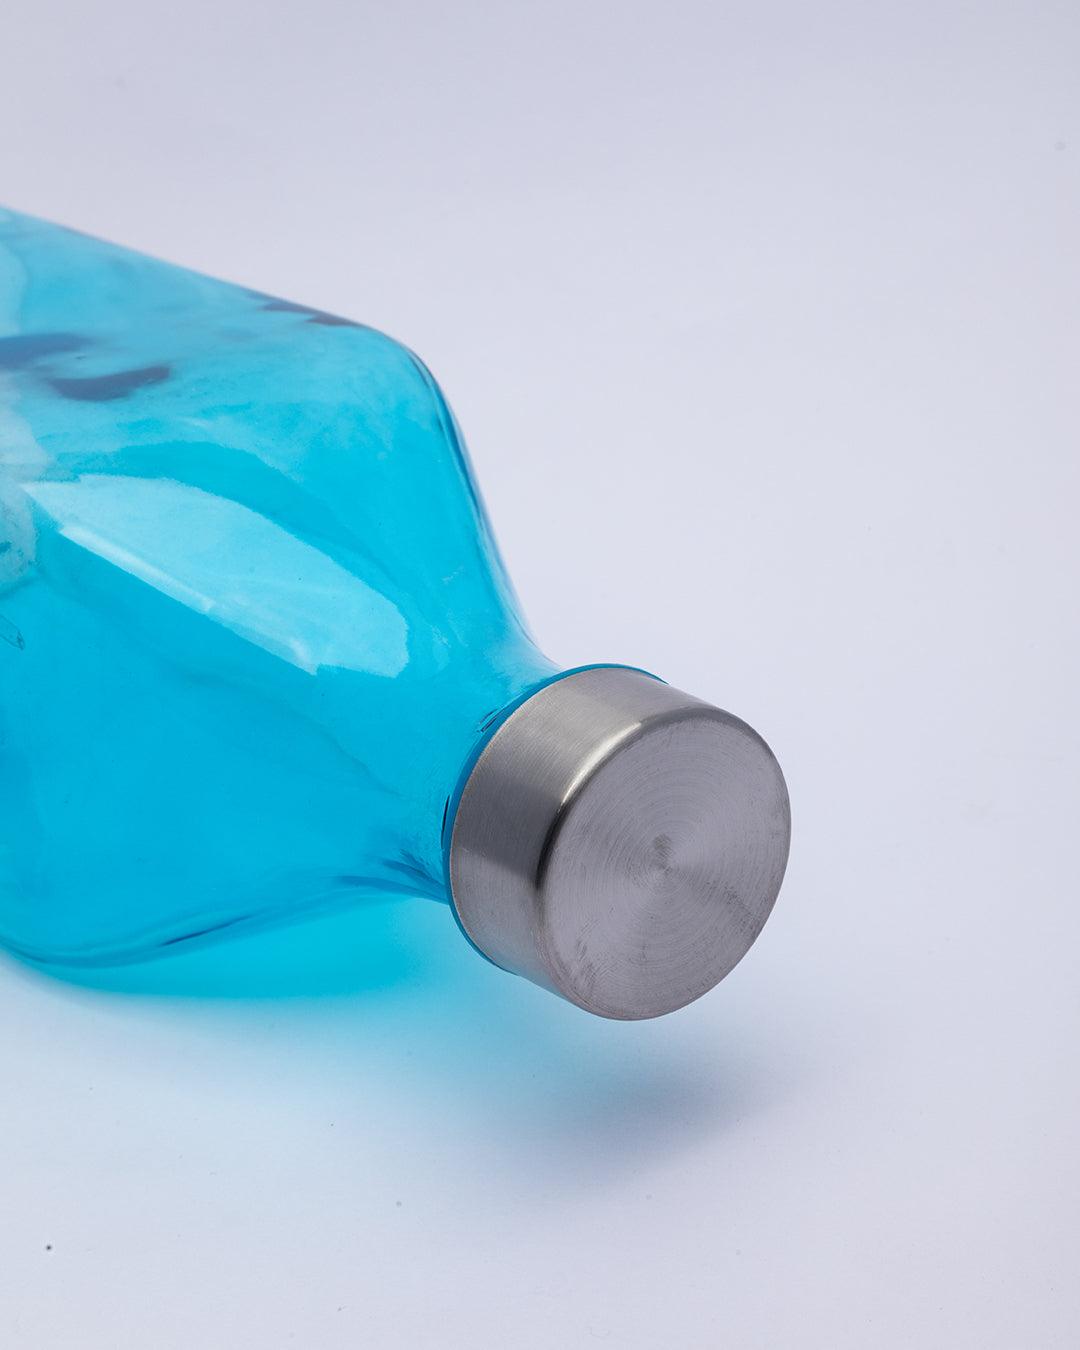 Glass Bottle, Water Bottle, Modern Design, Blue, Glass, 1.1 Litre - MARKET 99